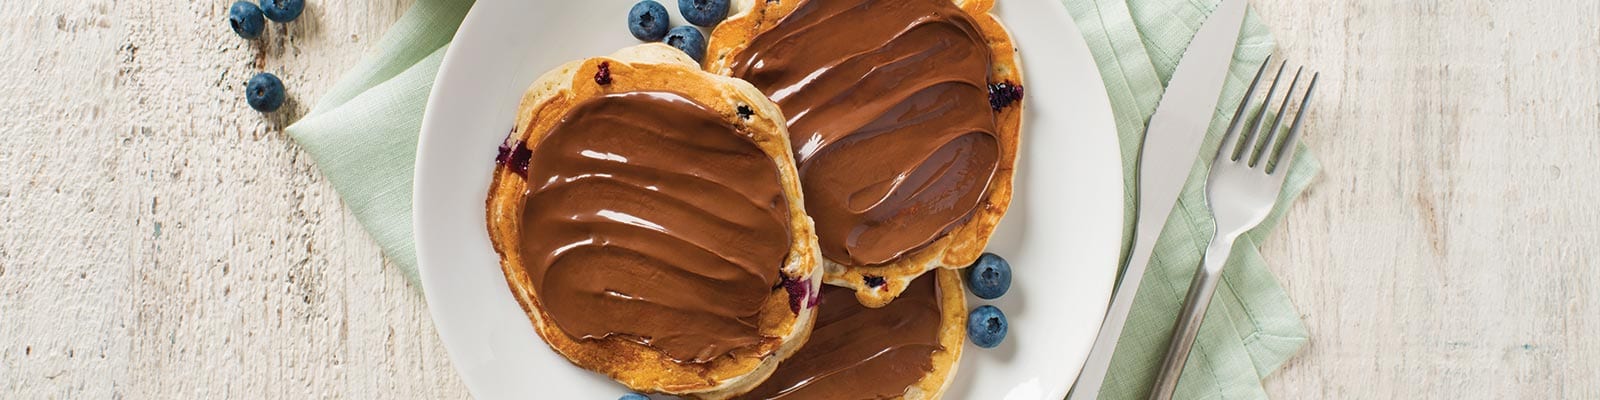 Yogurt and Berry Pancakes with NUTELLA<sup>®</sup> hazelnut spread